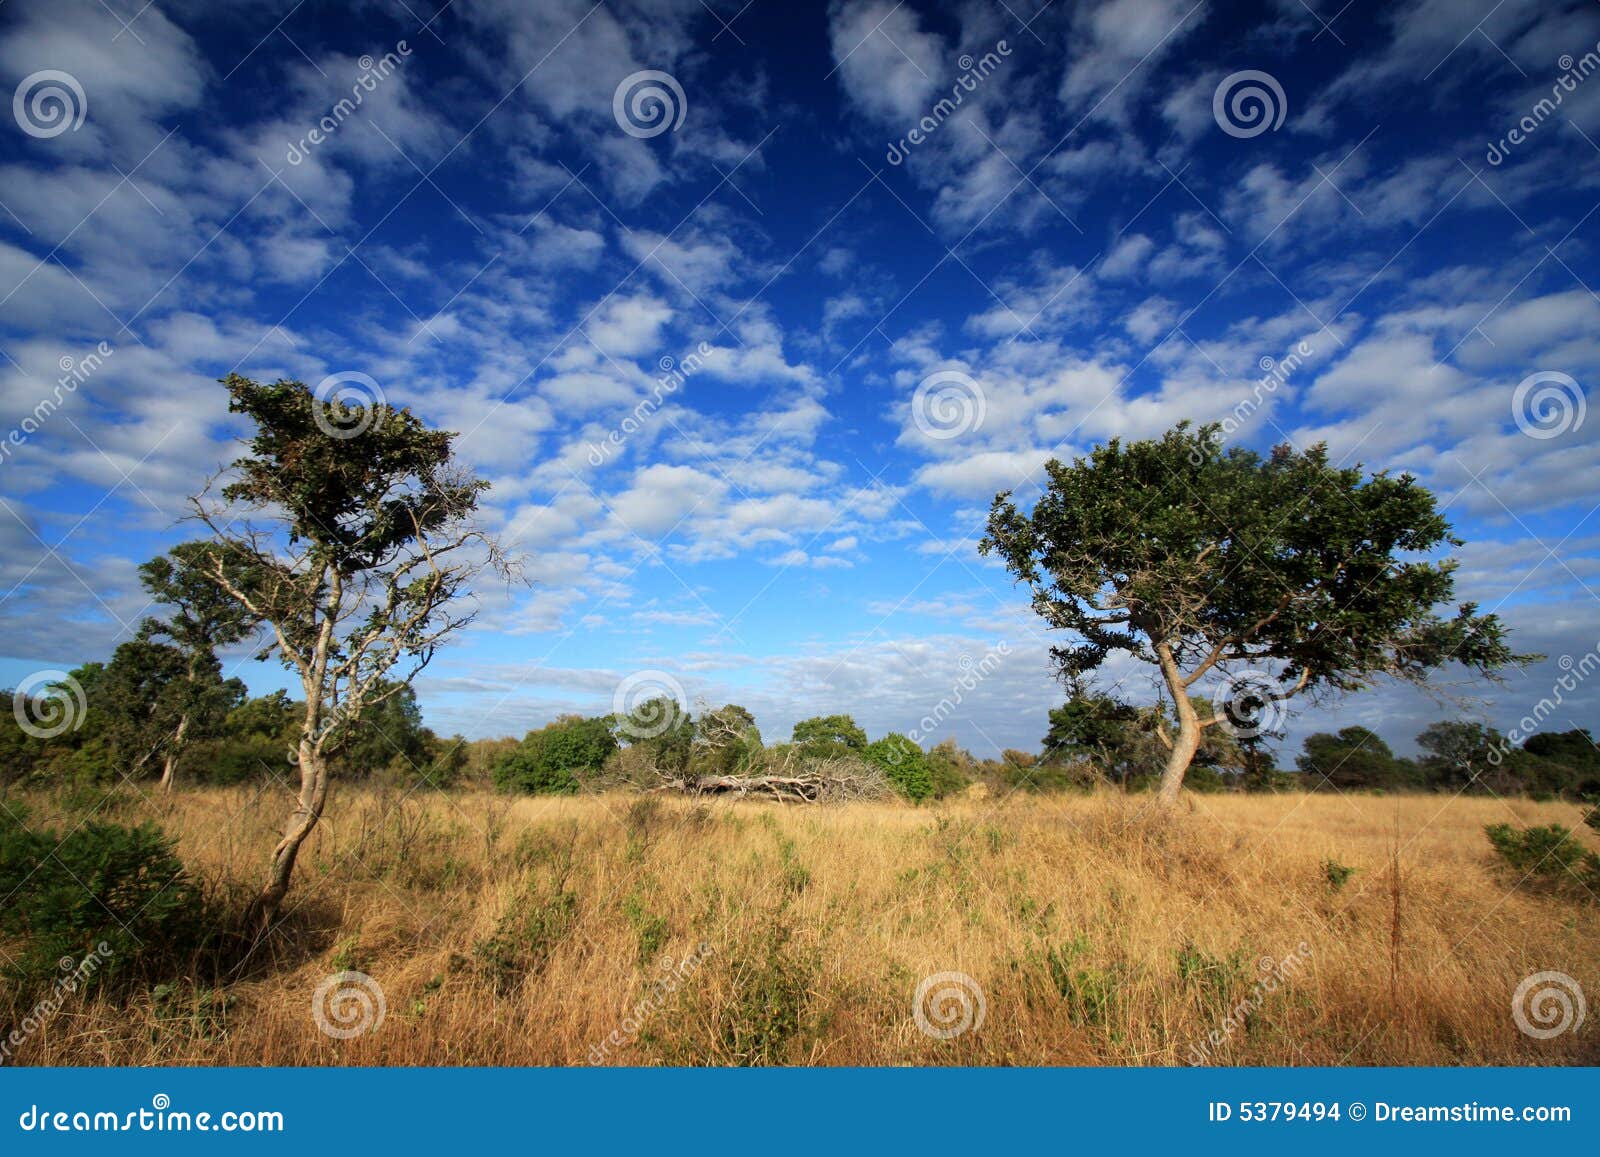 south-africa-scenery-5379494.jpg